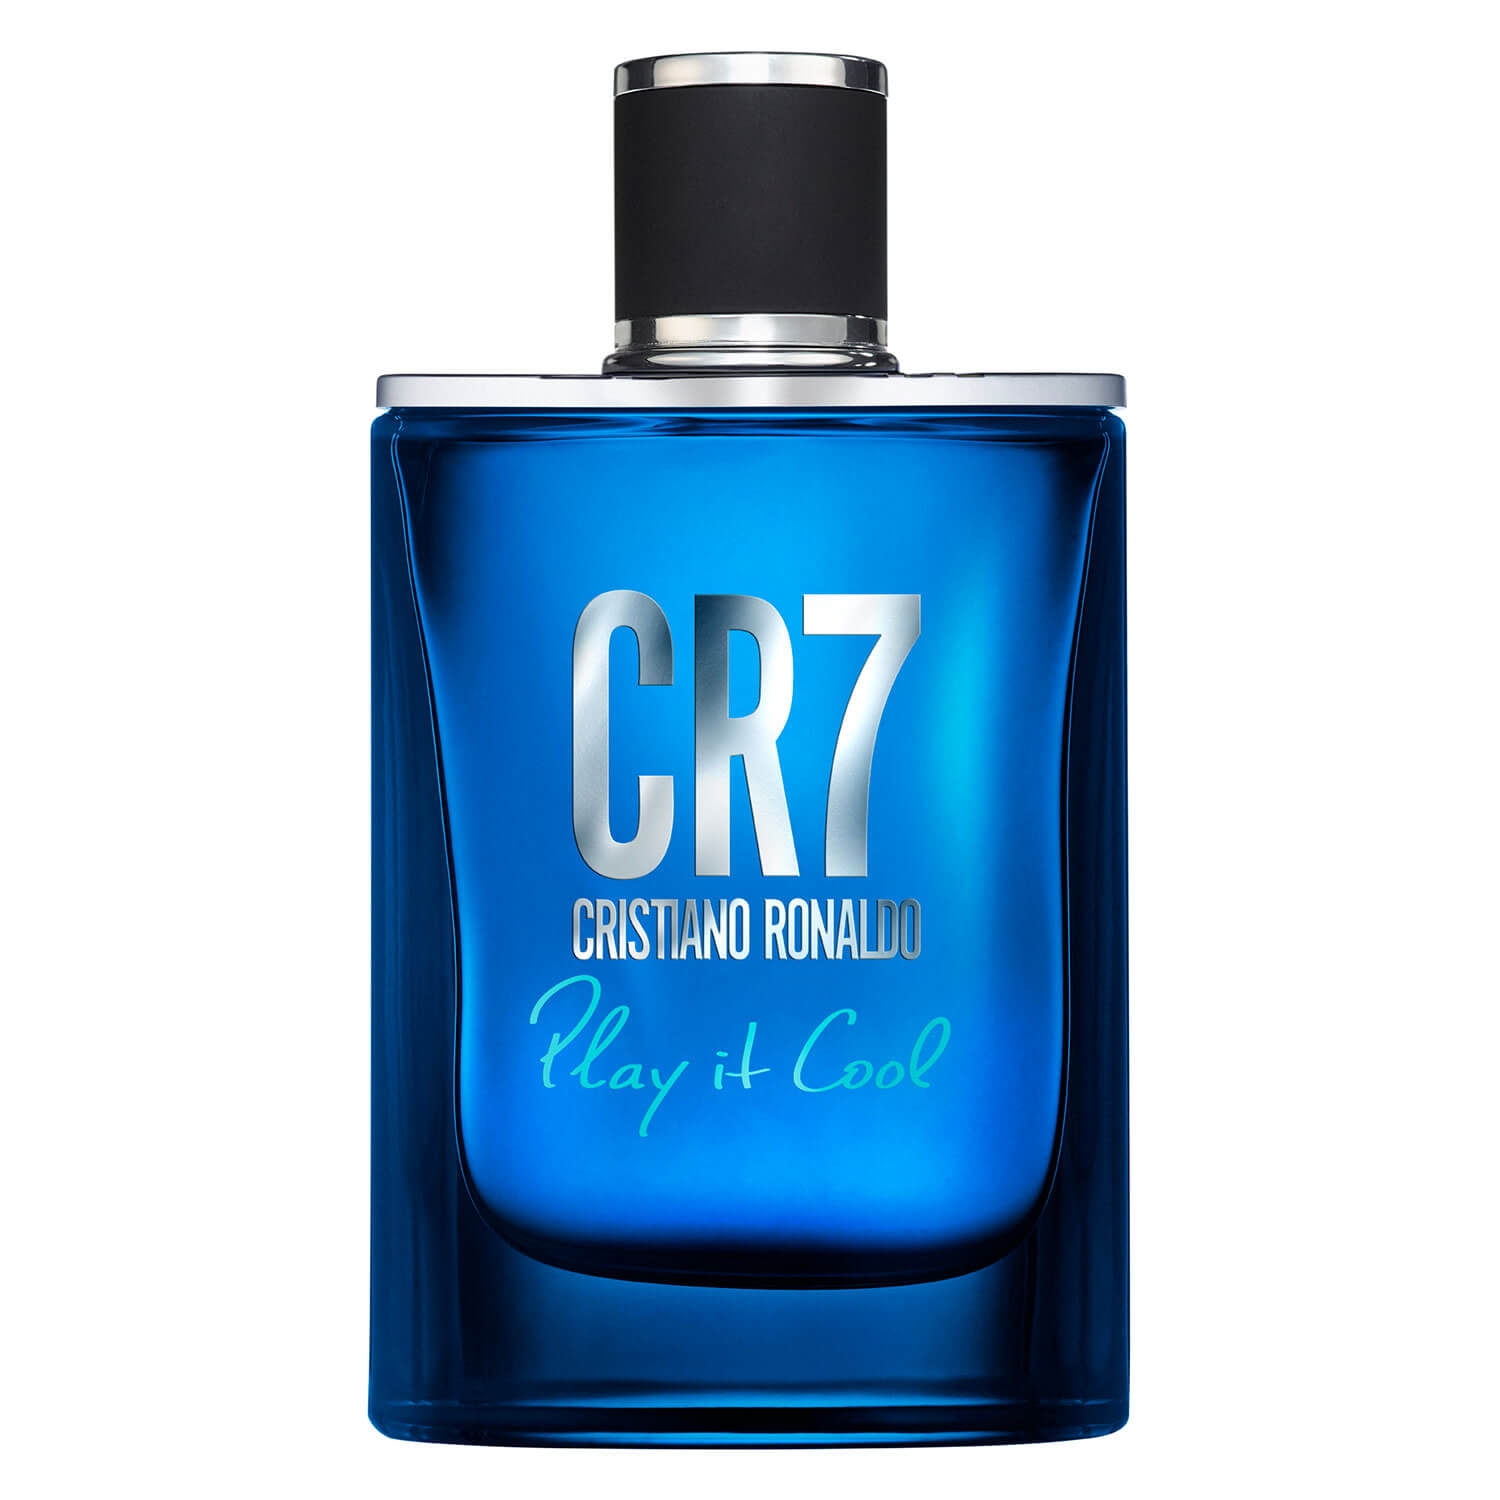 Product image from CR7 Cristiano Ronaldo - Play it Cool Eau de Toilette